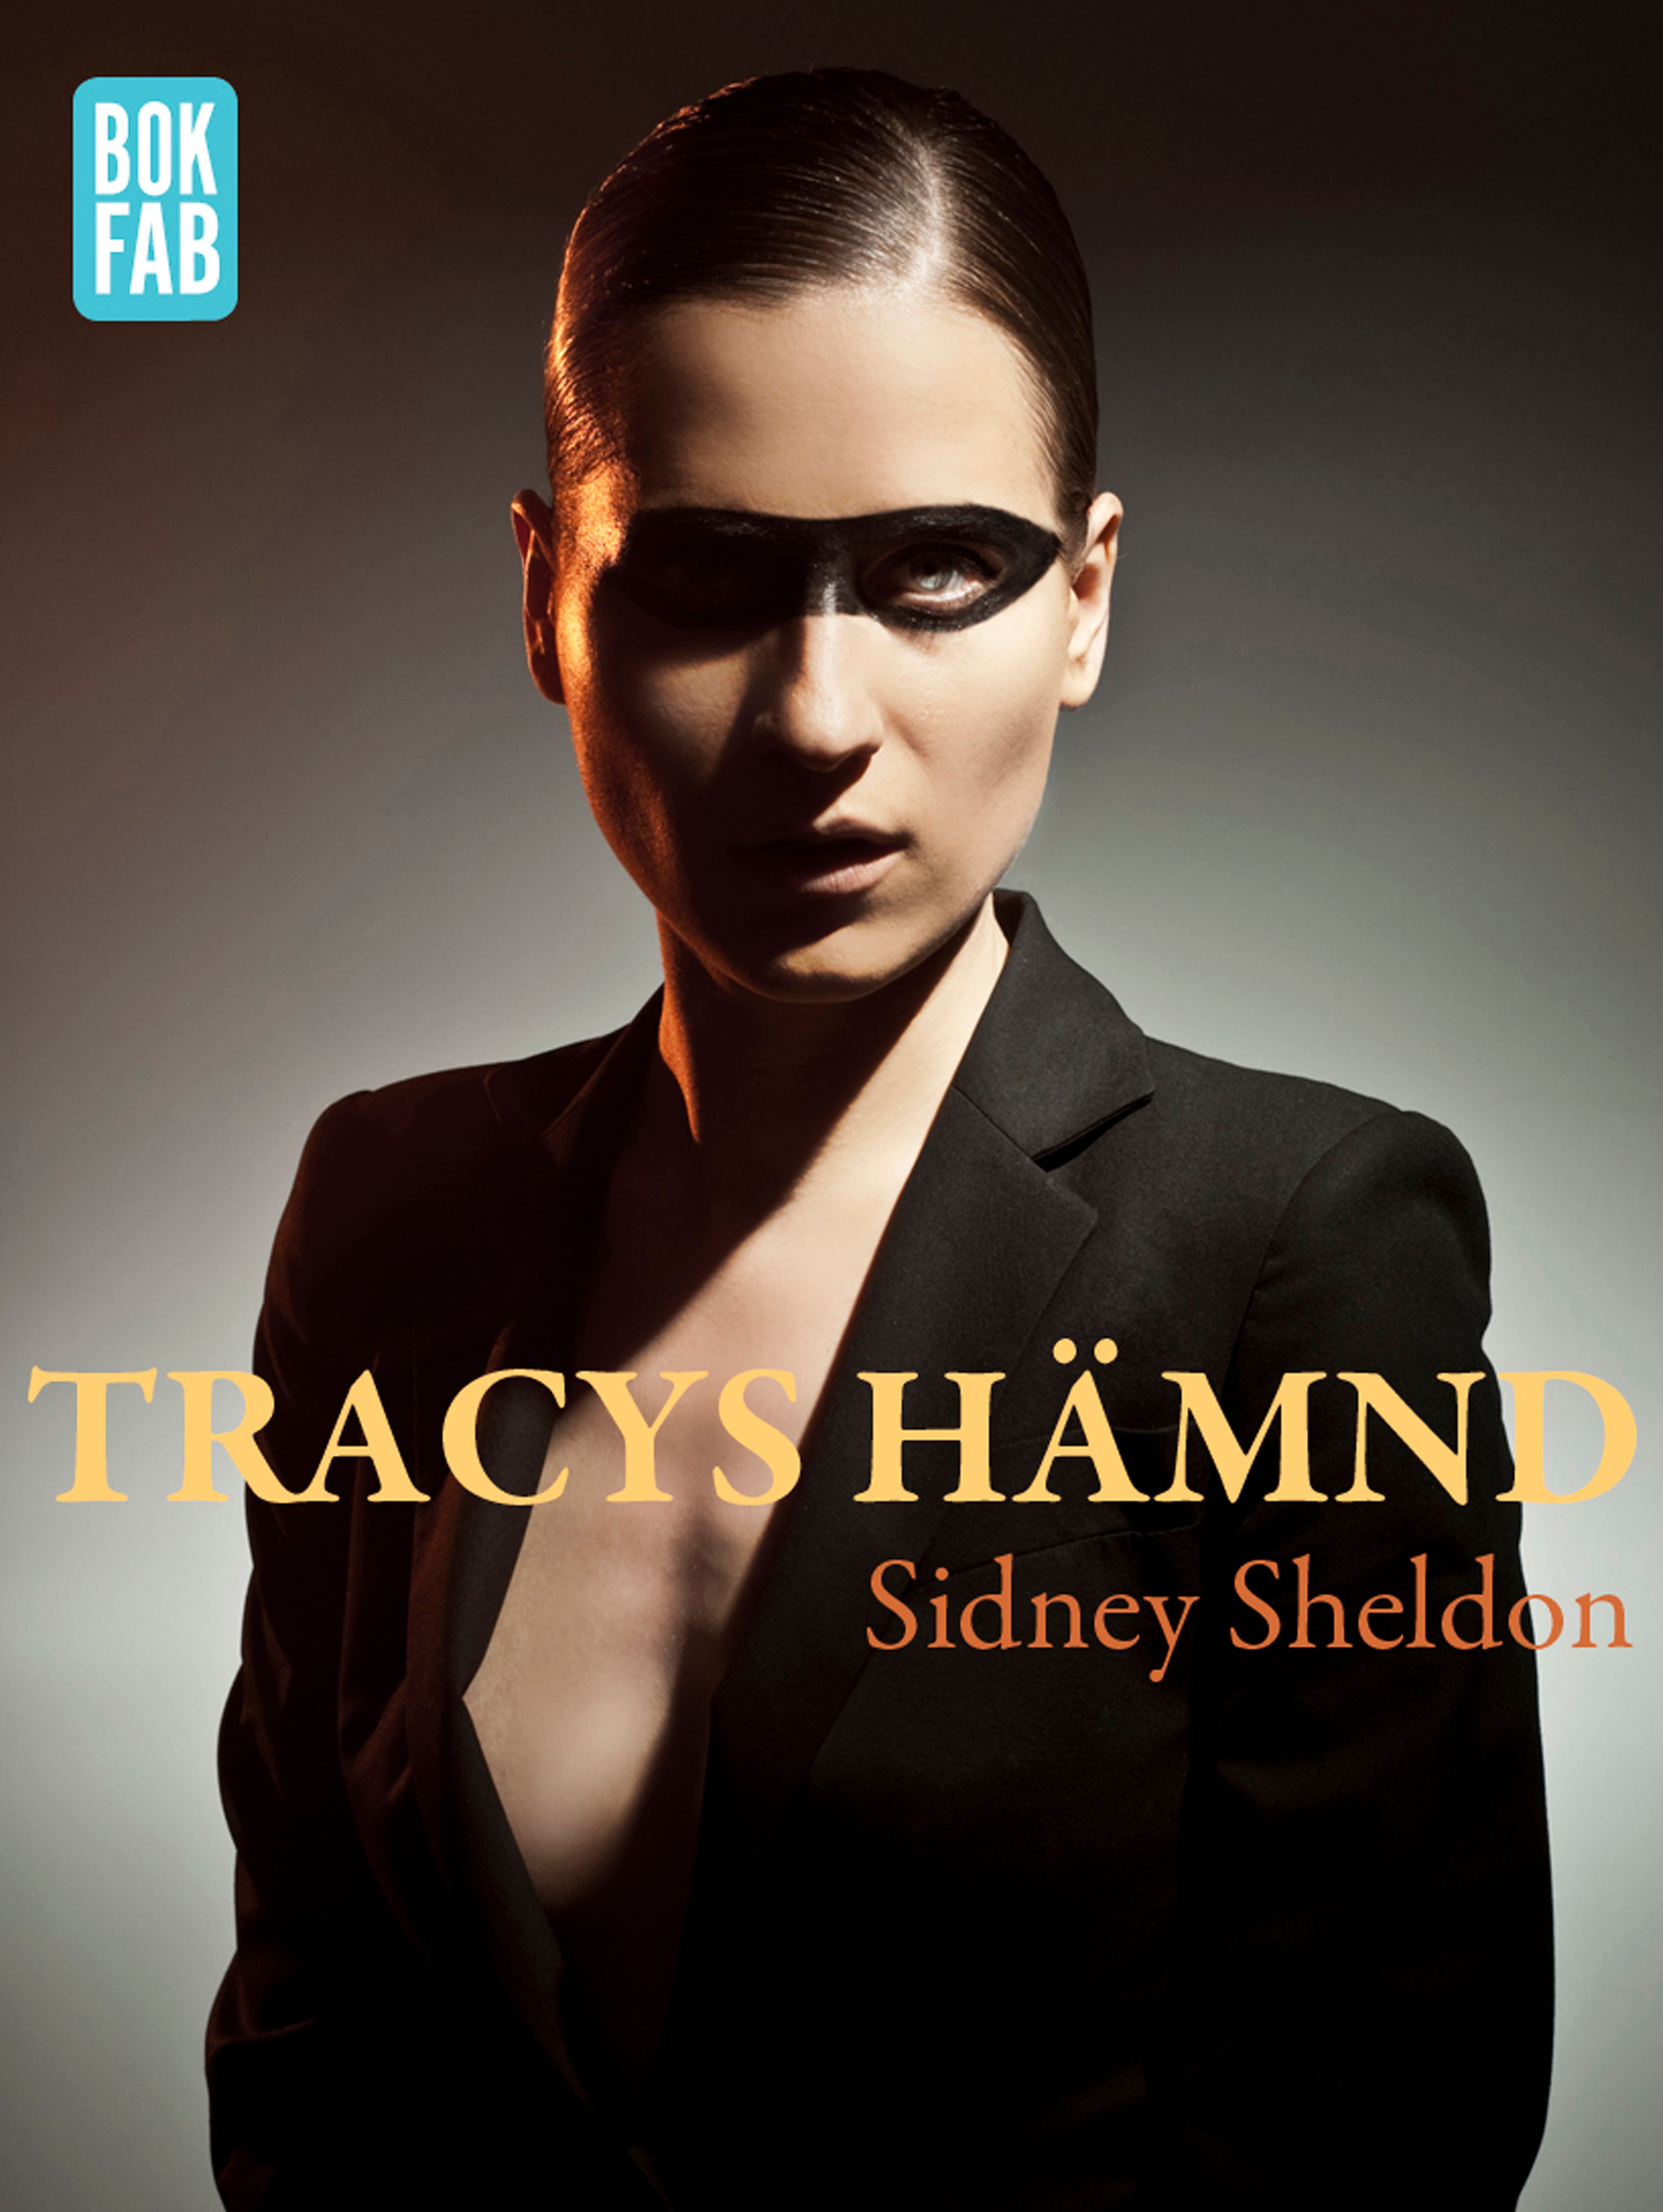 Tracys hämnd, eBook by Sidney Sheldon